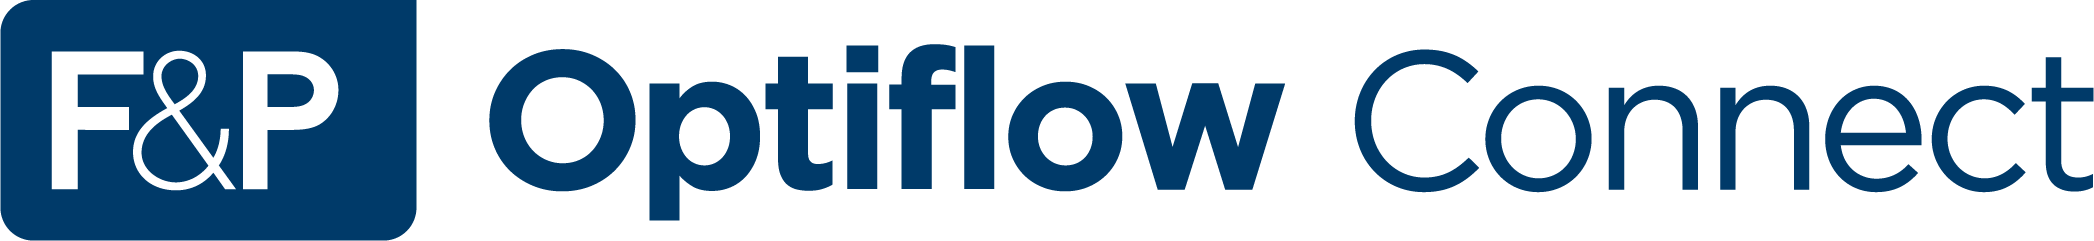 F&P Optiflow Connect